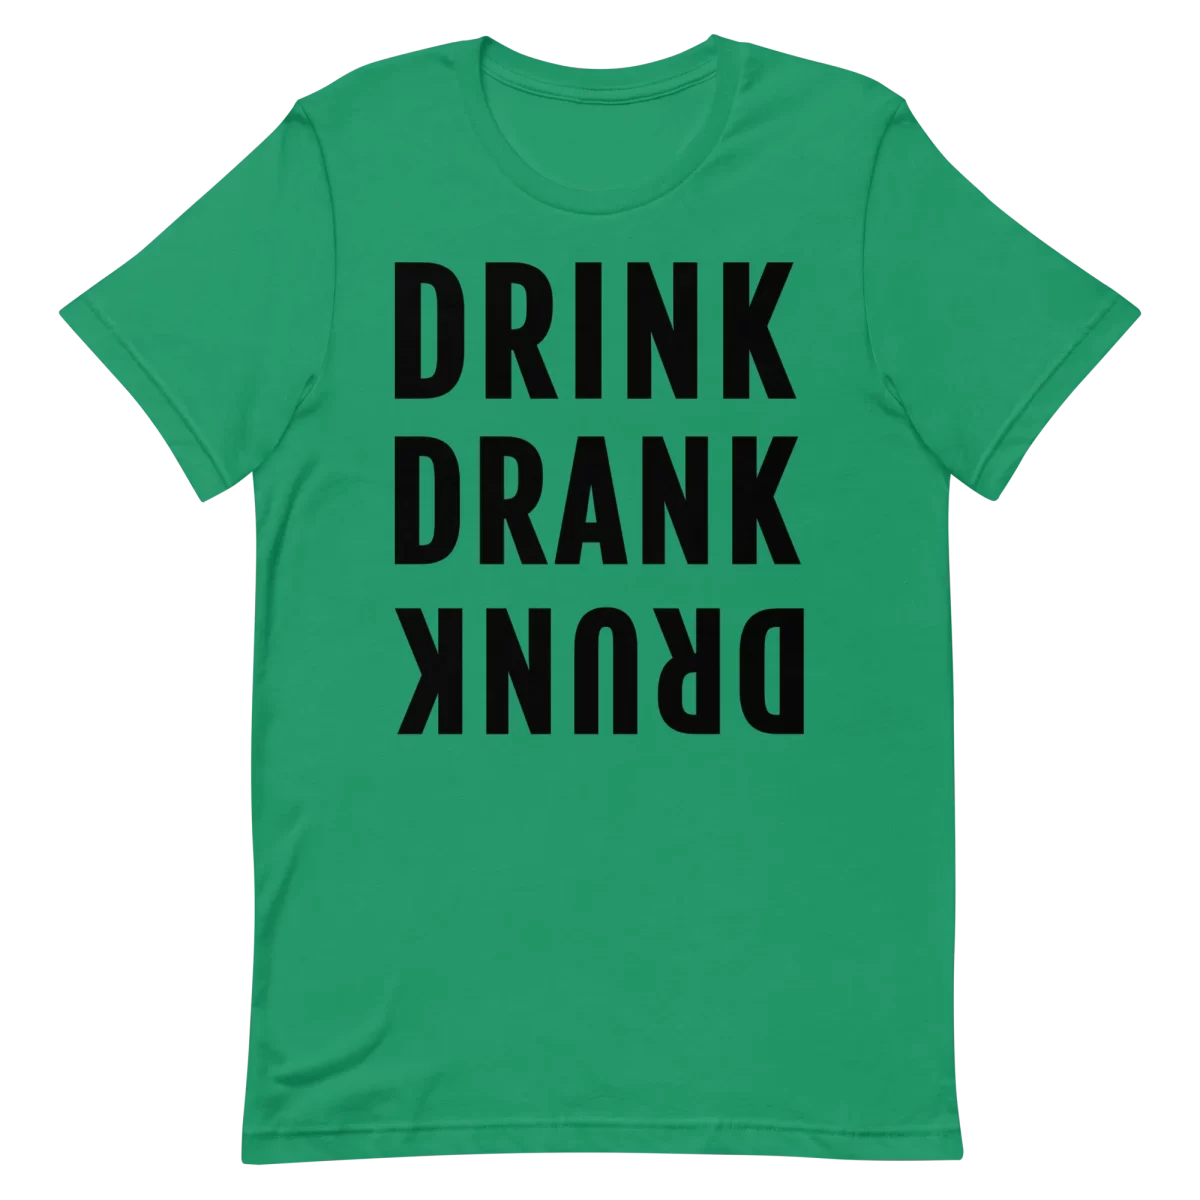 Unisex T-Shirt - DRINK DRANK DRUNK - Kelly